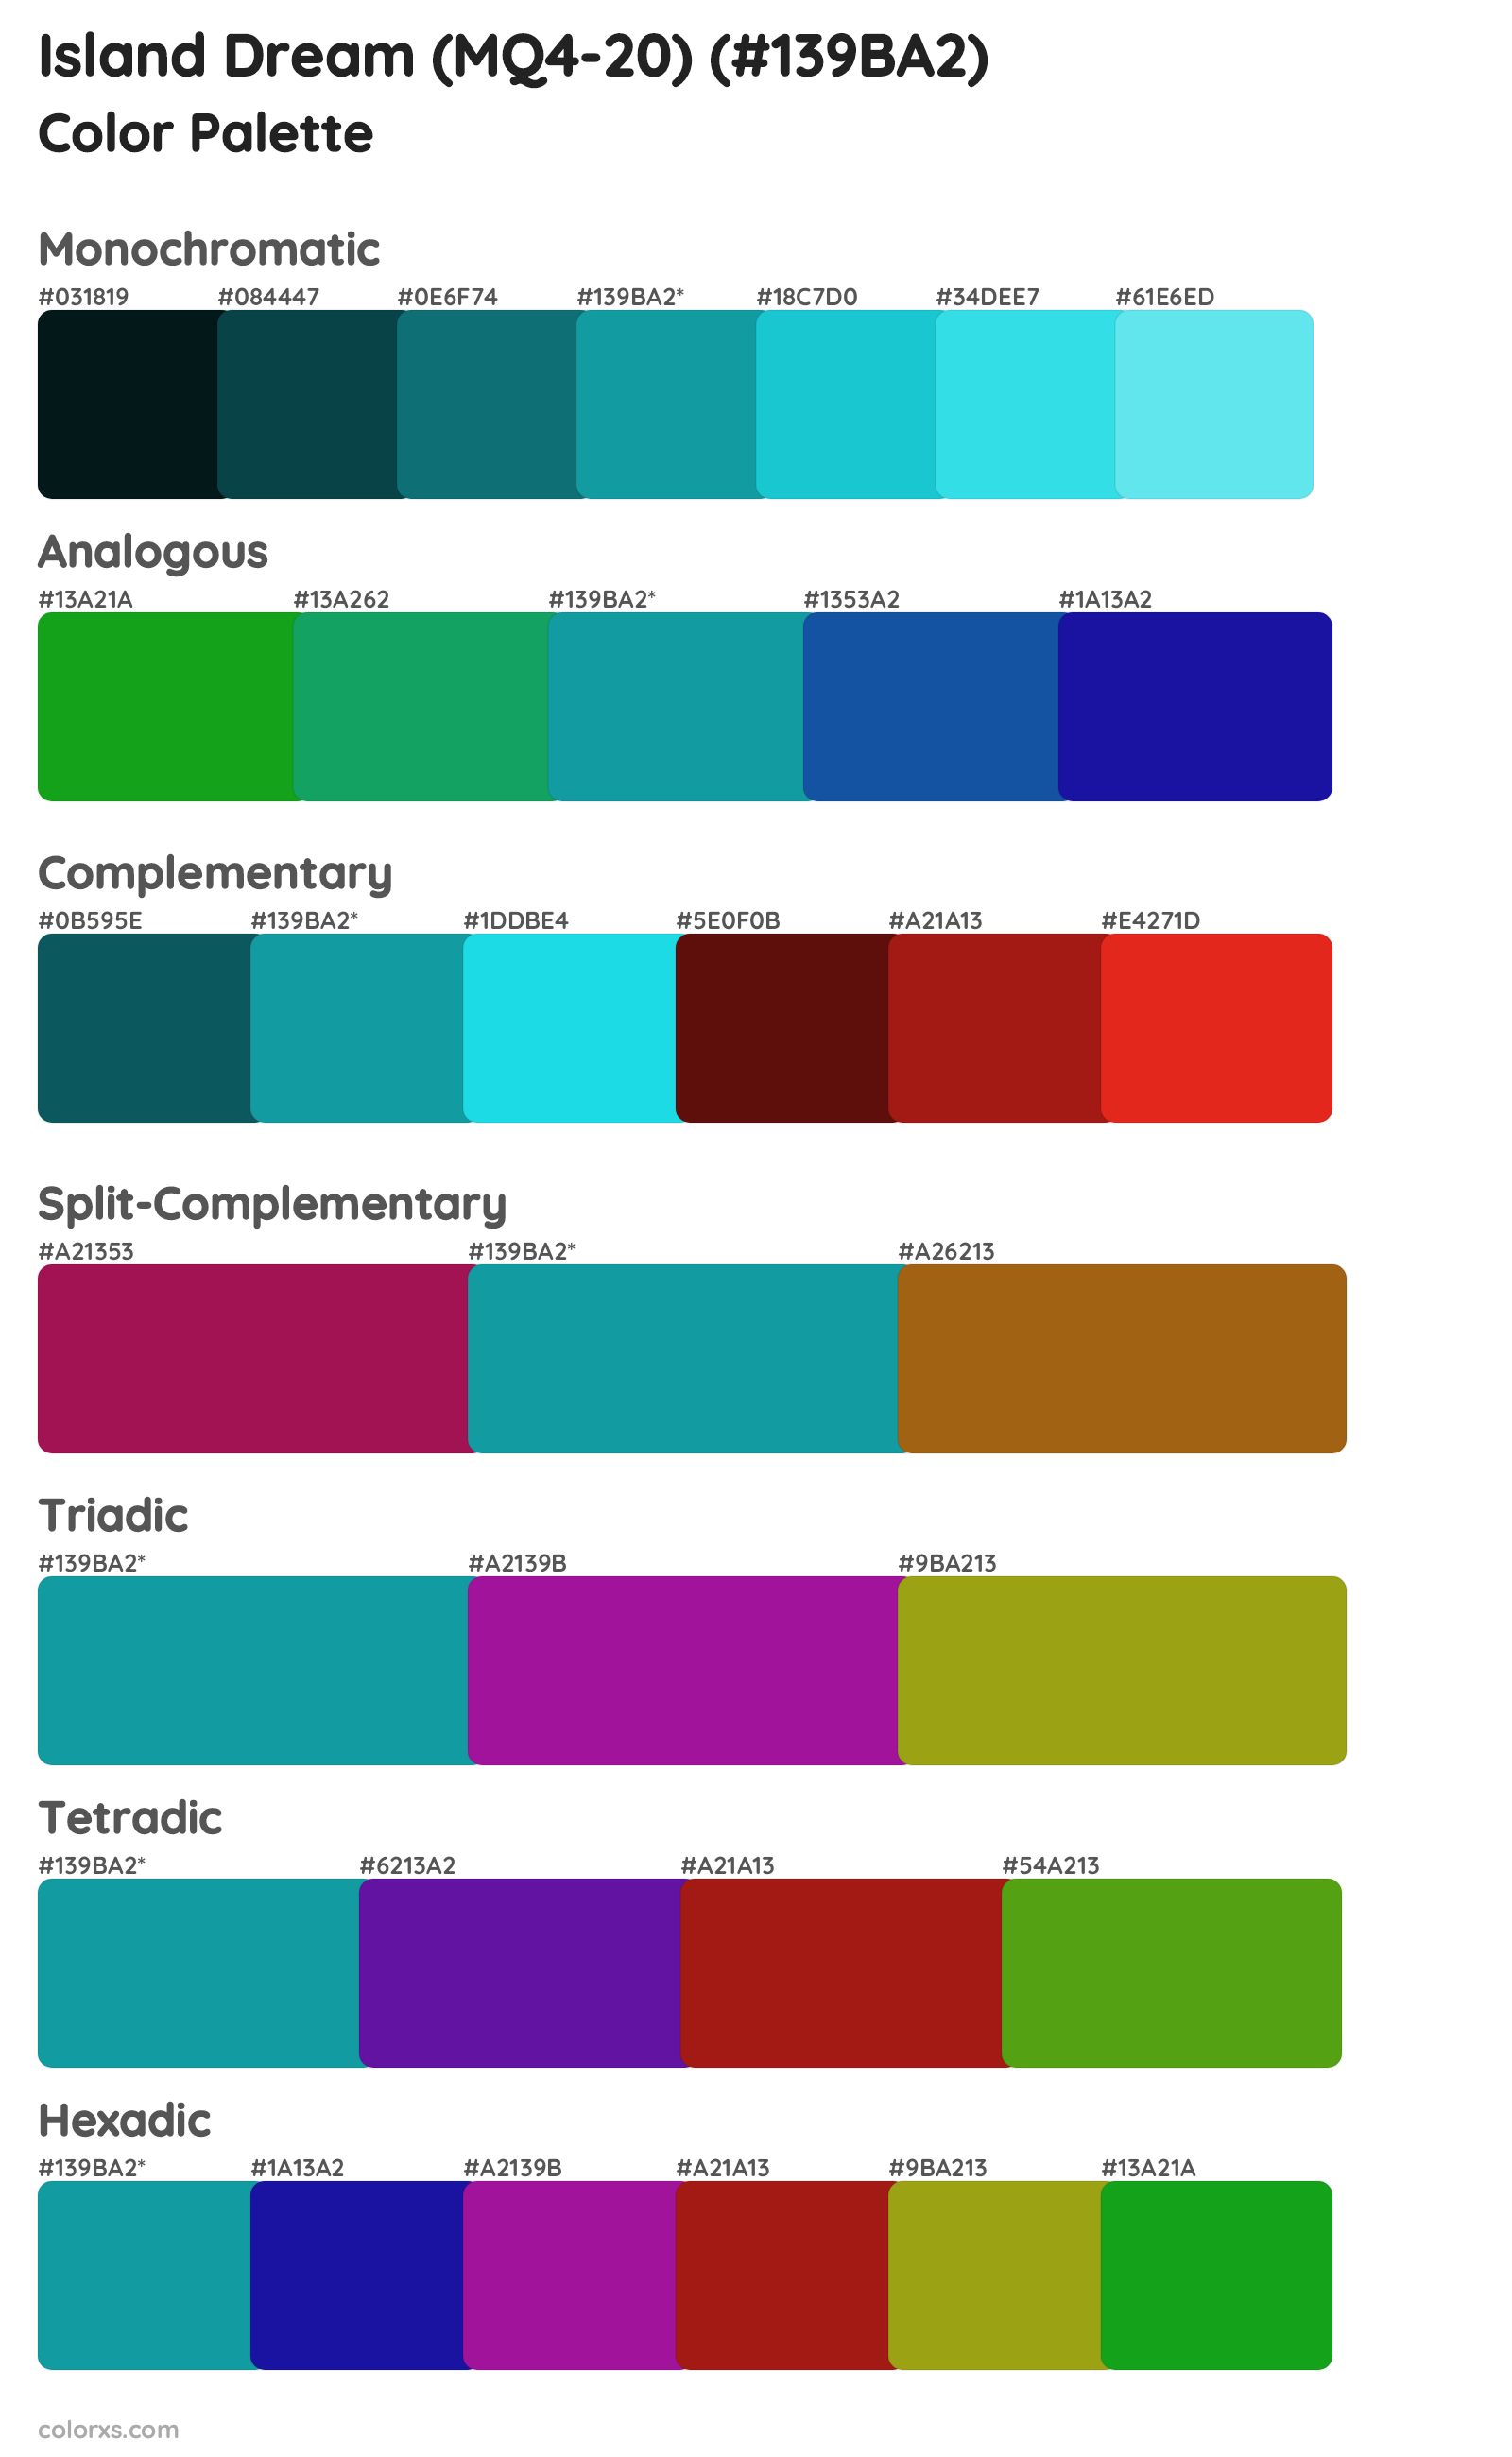 Island Dream (MQ4-20) Color Scheme Palettes